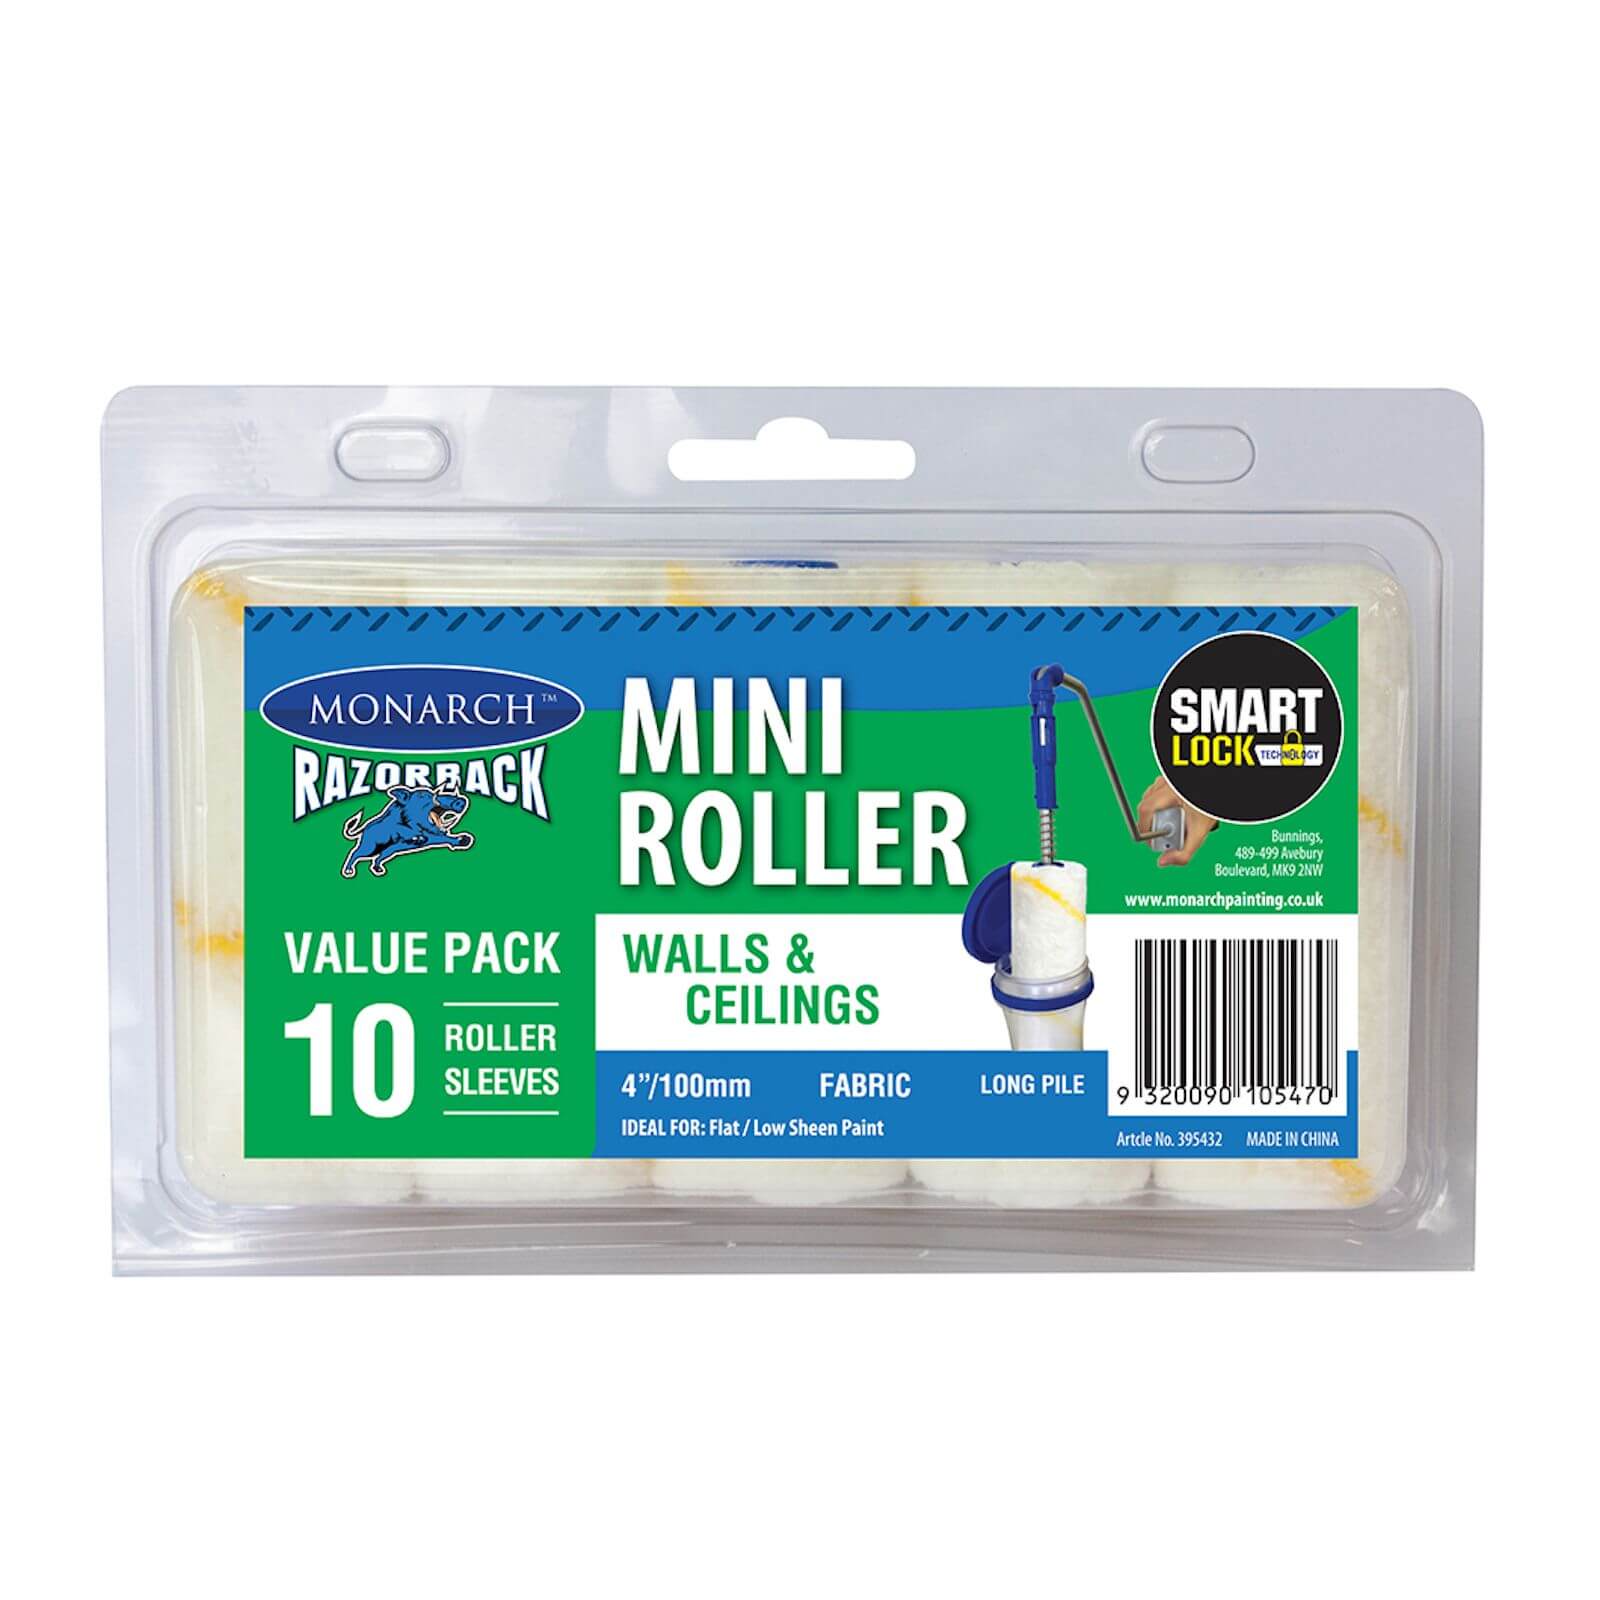 Monarch Razorback Mini Roller Refill Fabric - 100mm - 10 Pack